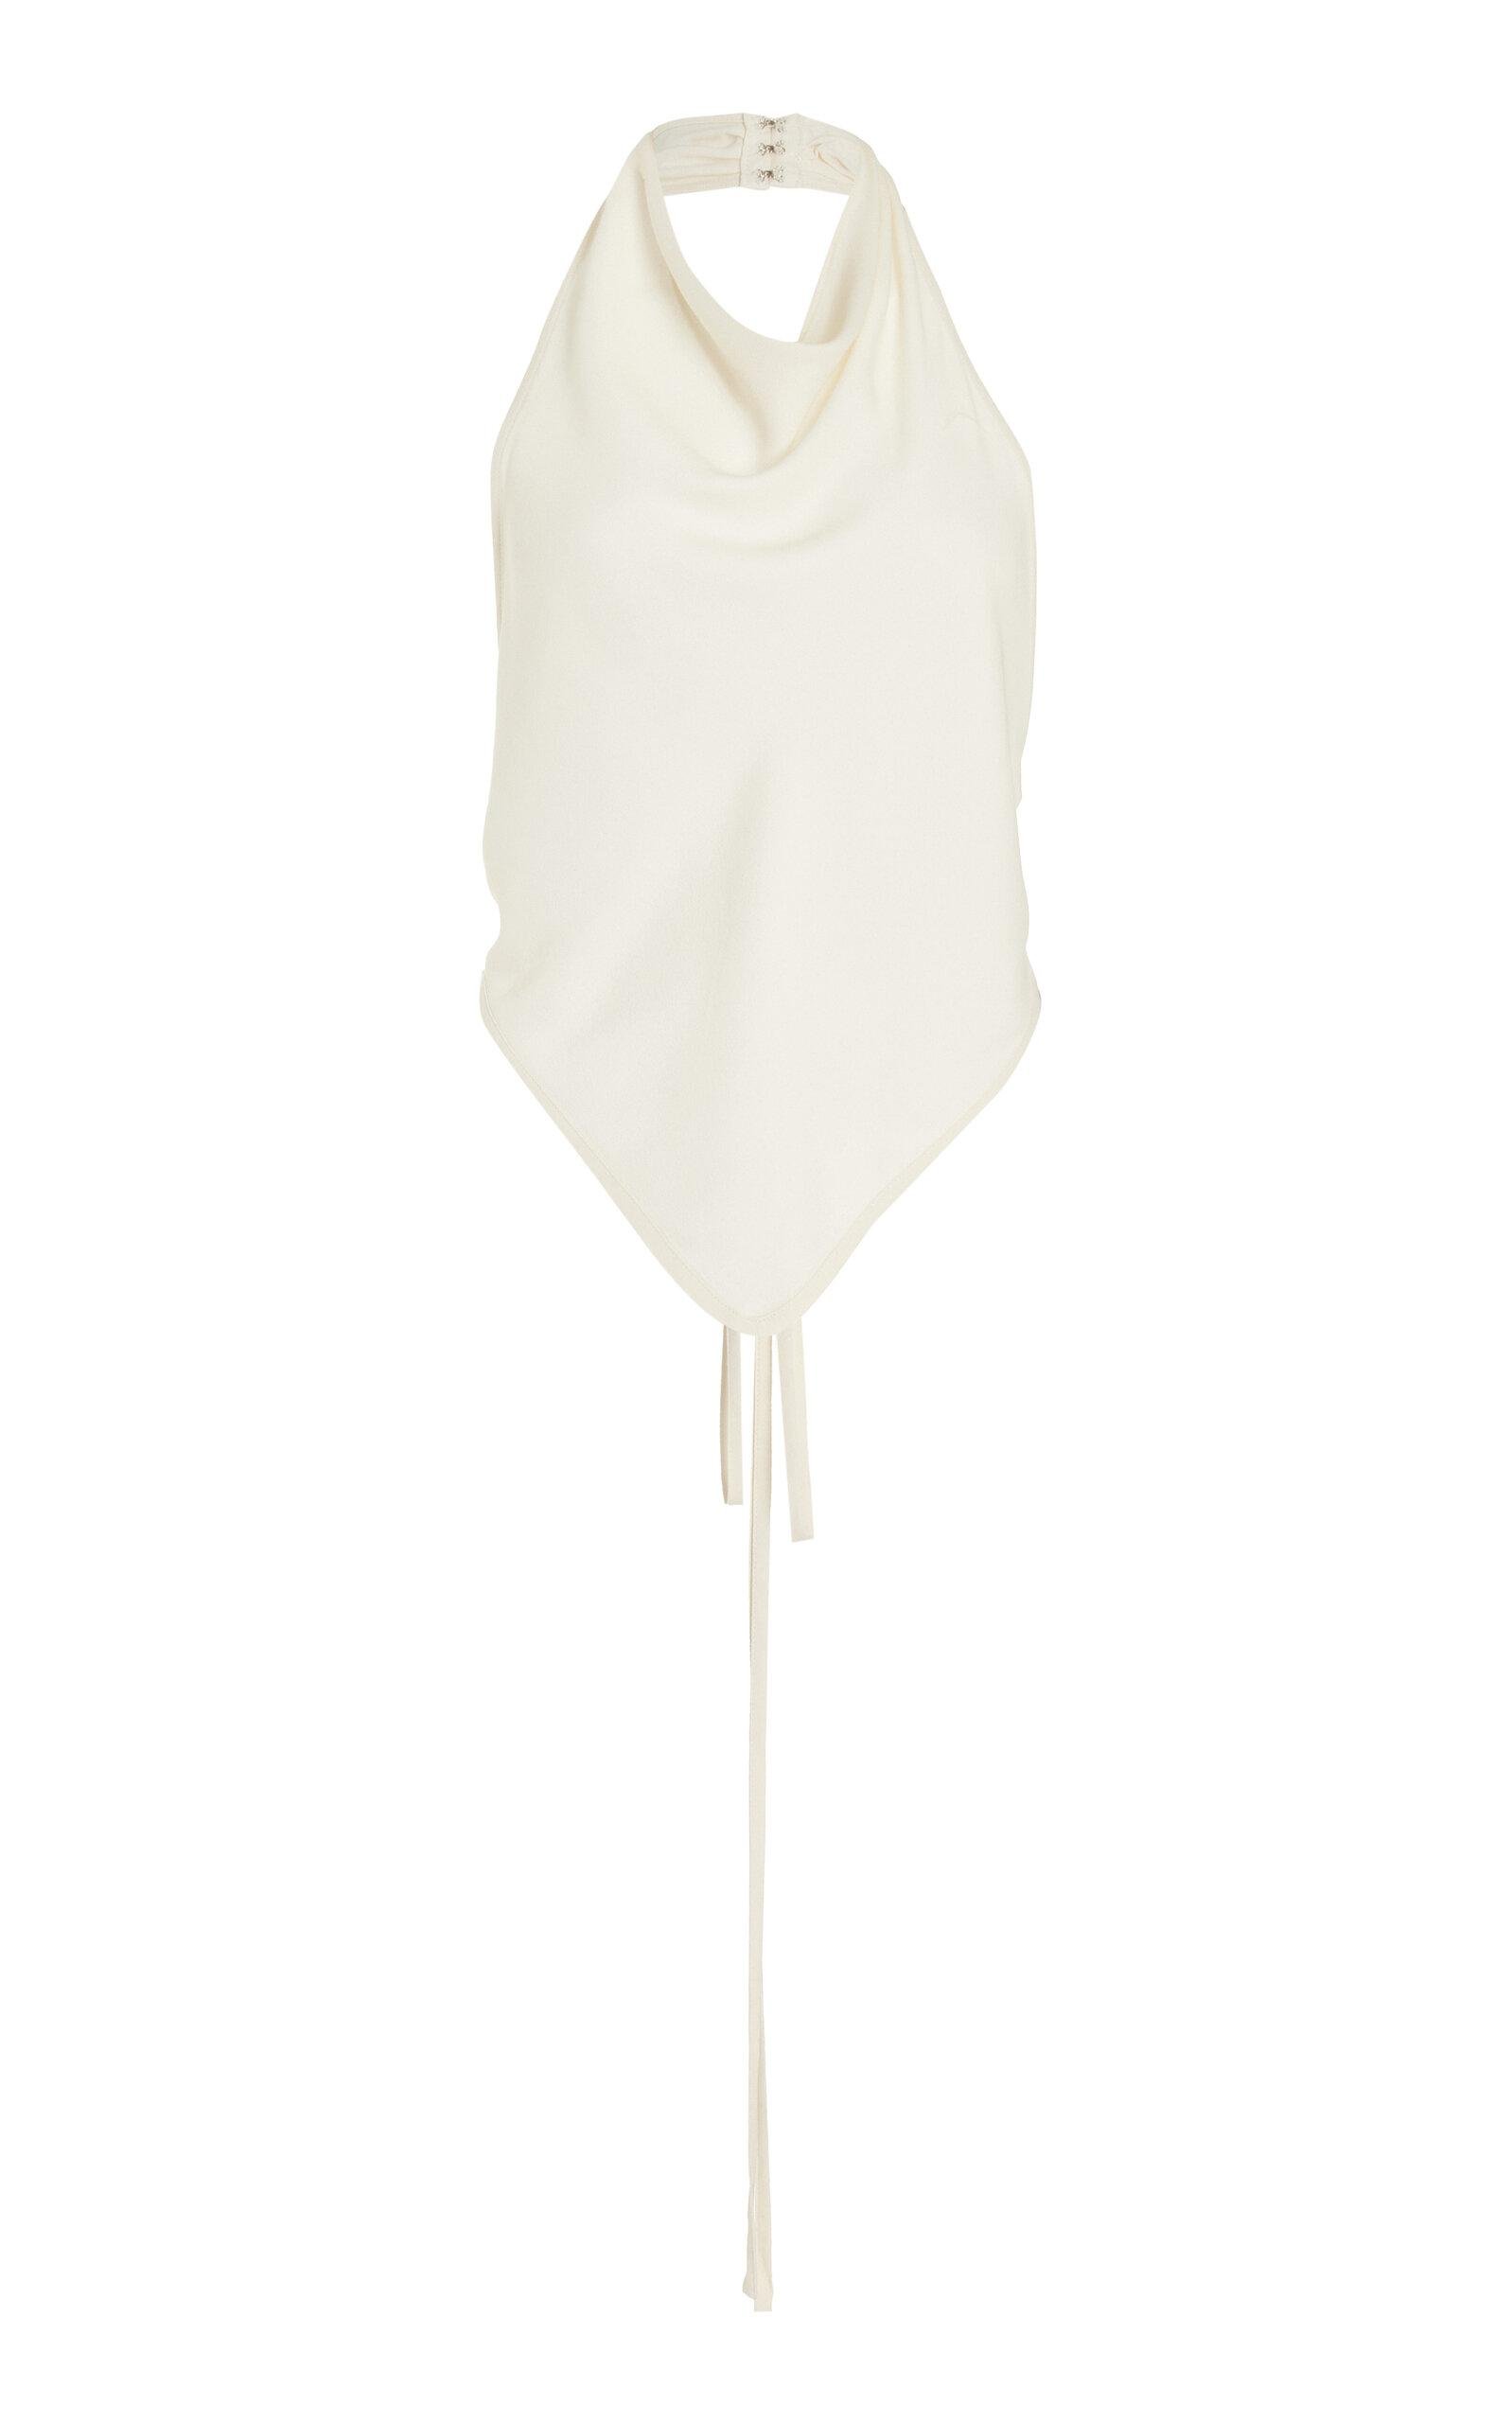 Third Form - Day Dreamer Crepe Kite Top - White - AU 14 - Moda Operandi by THIRD FORM